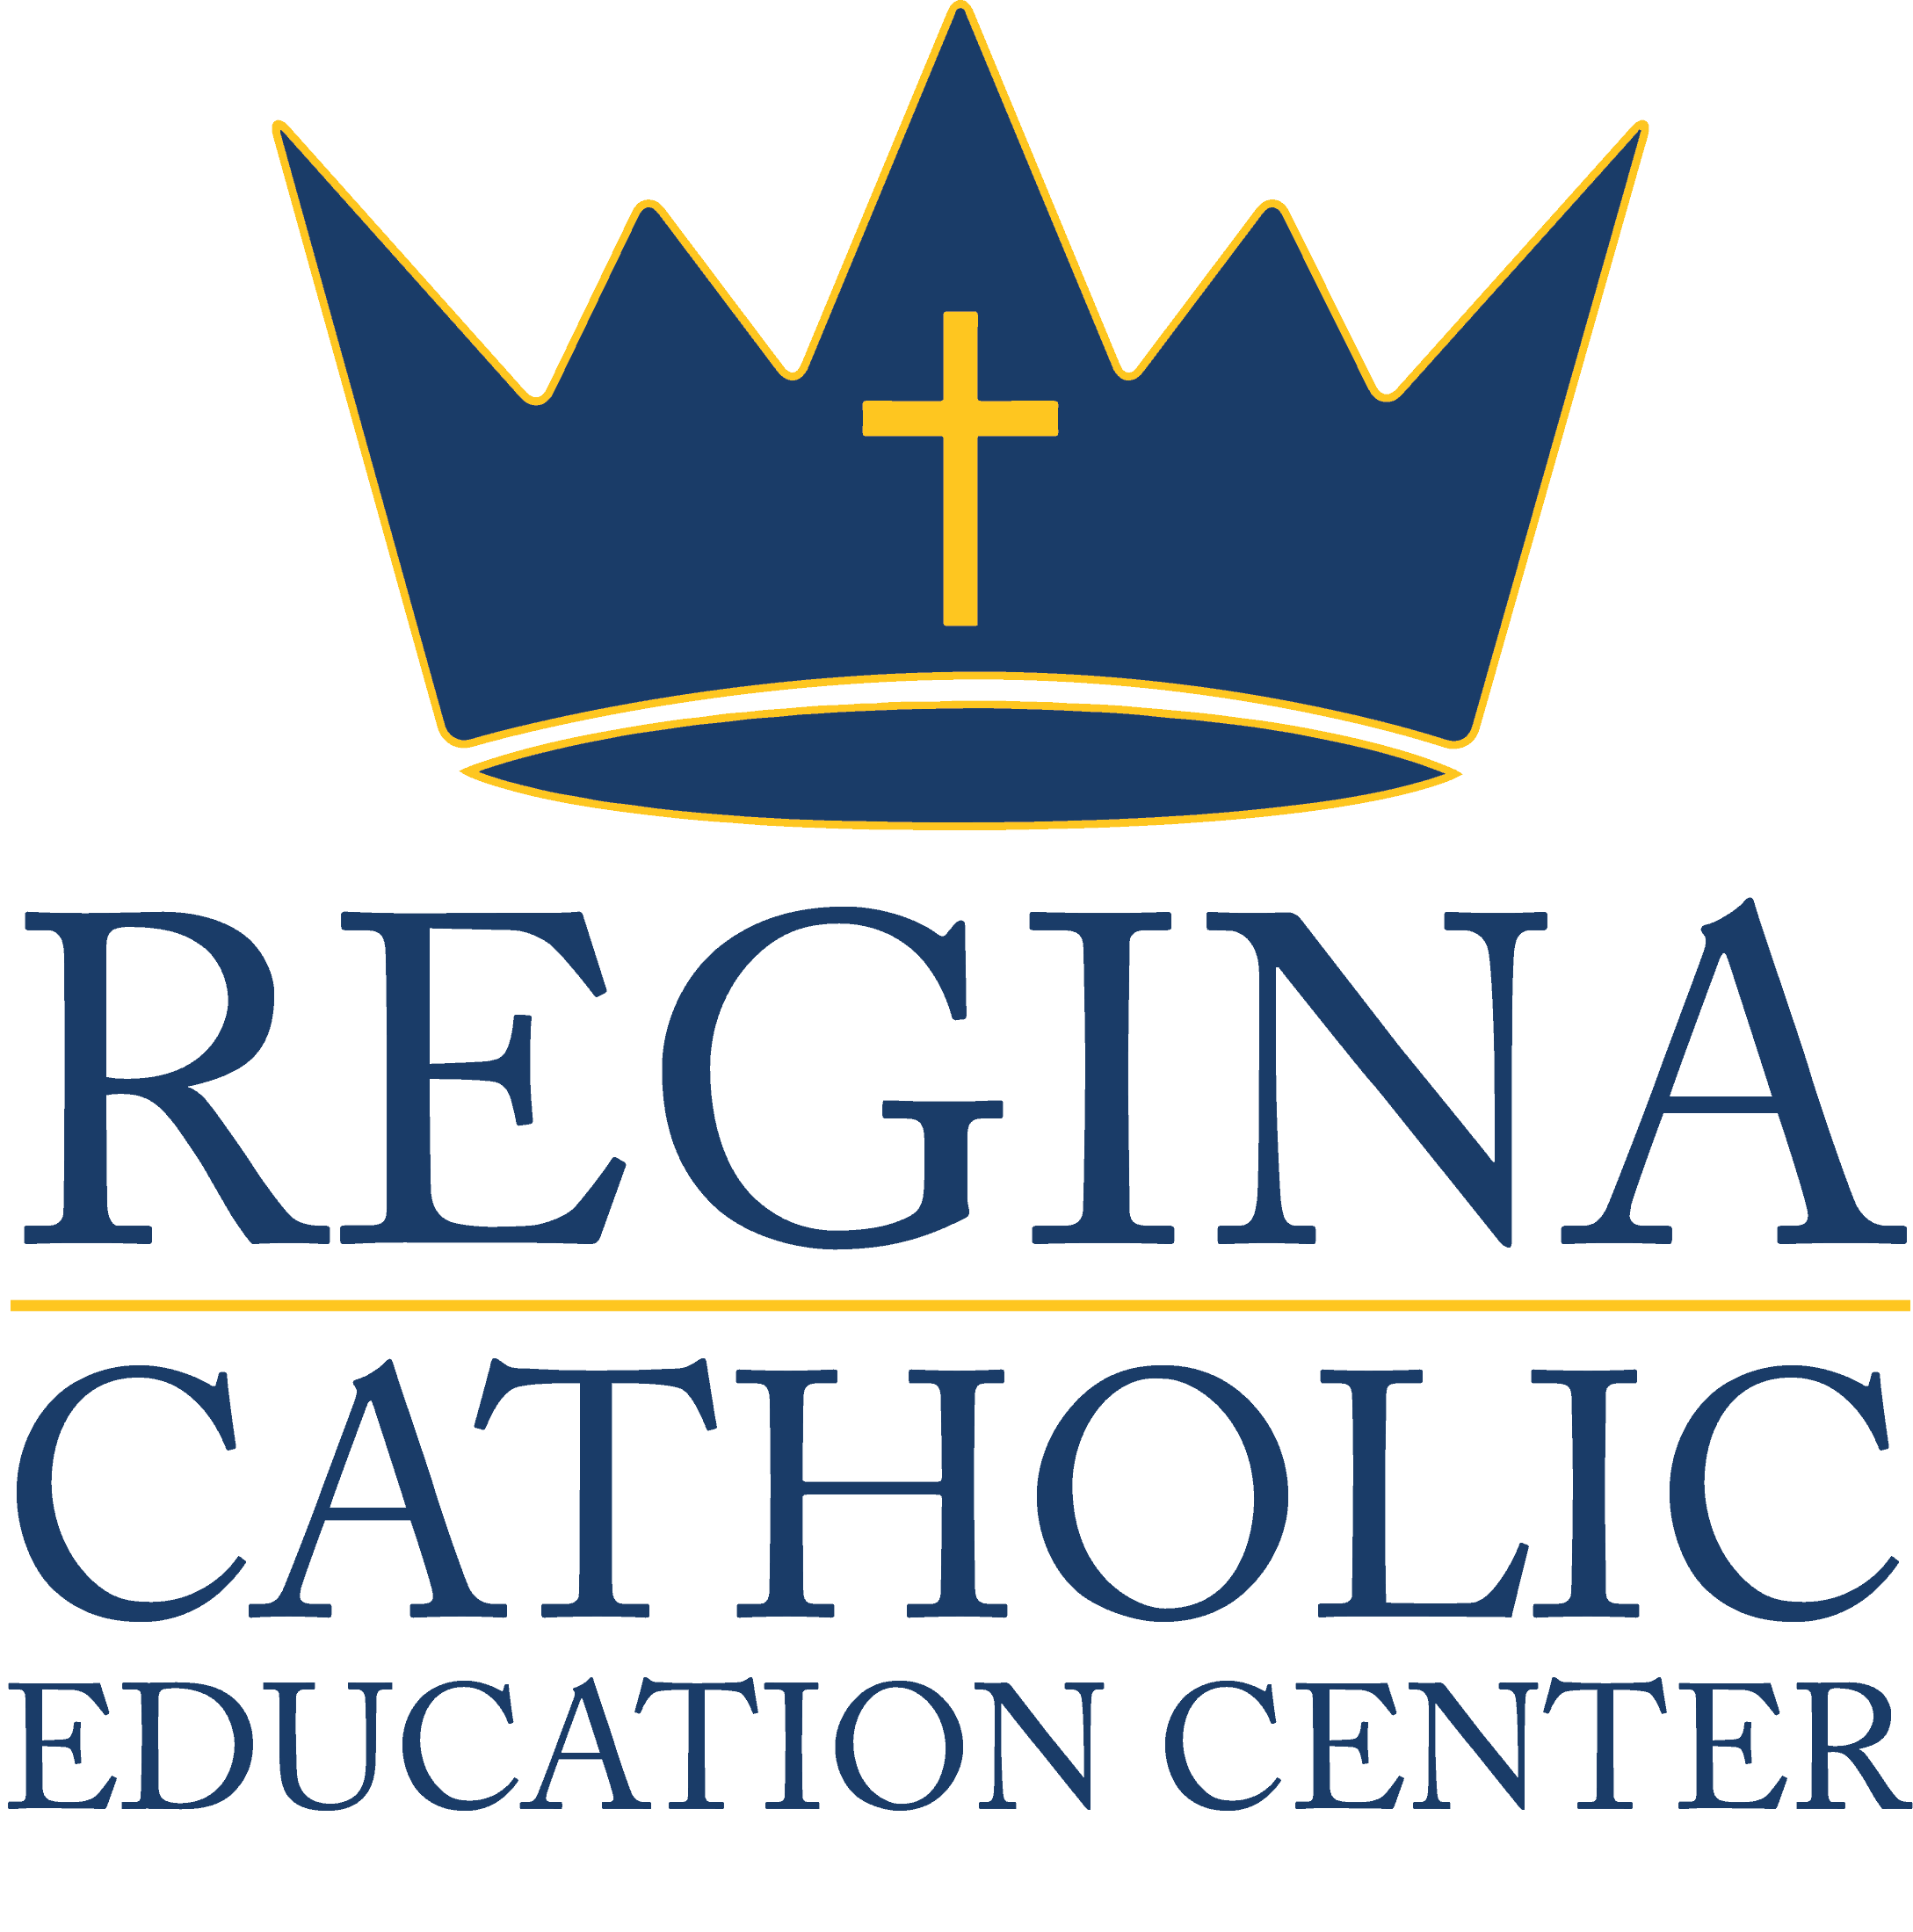 Regina Logo - Regina Catholic Education Center